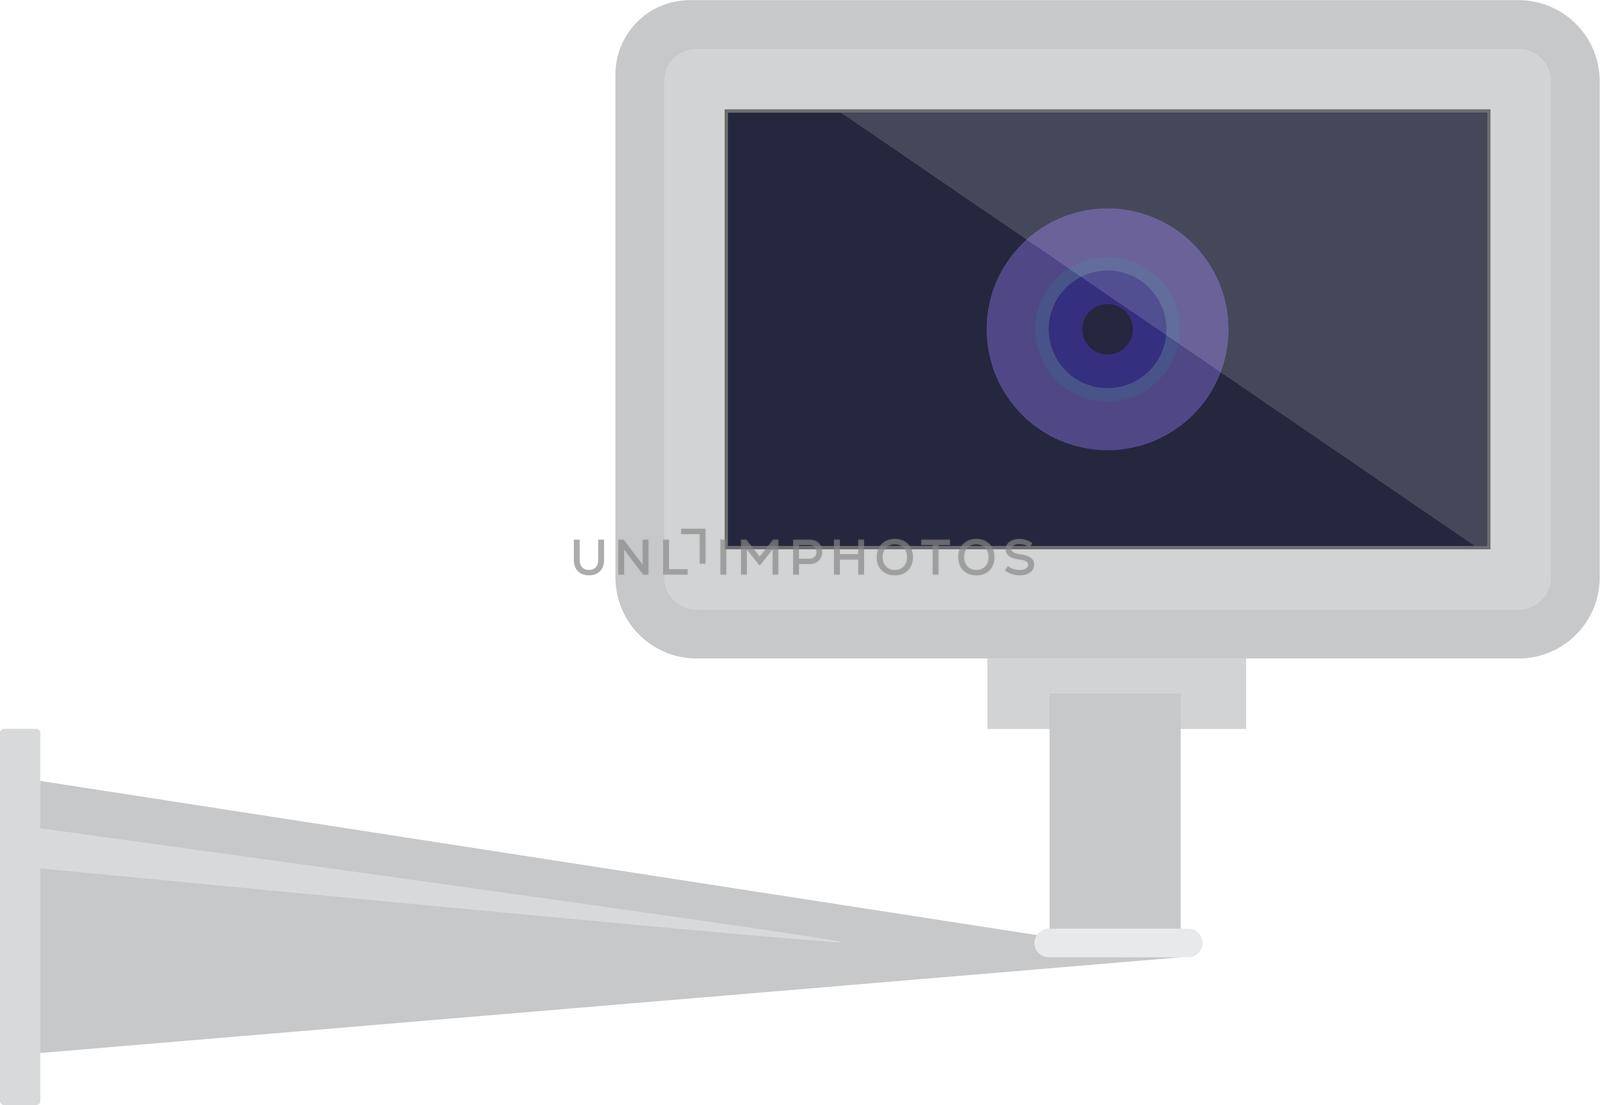 CCTV camera, illustration, vector on white background.